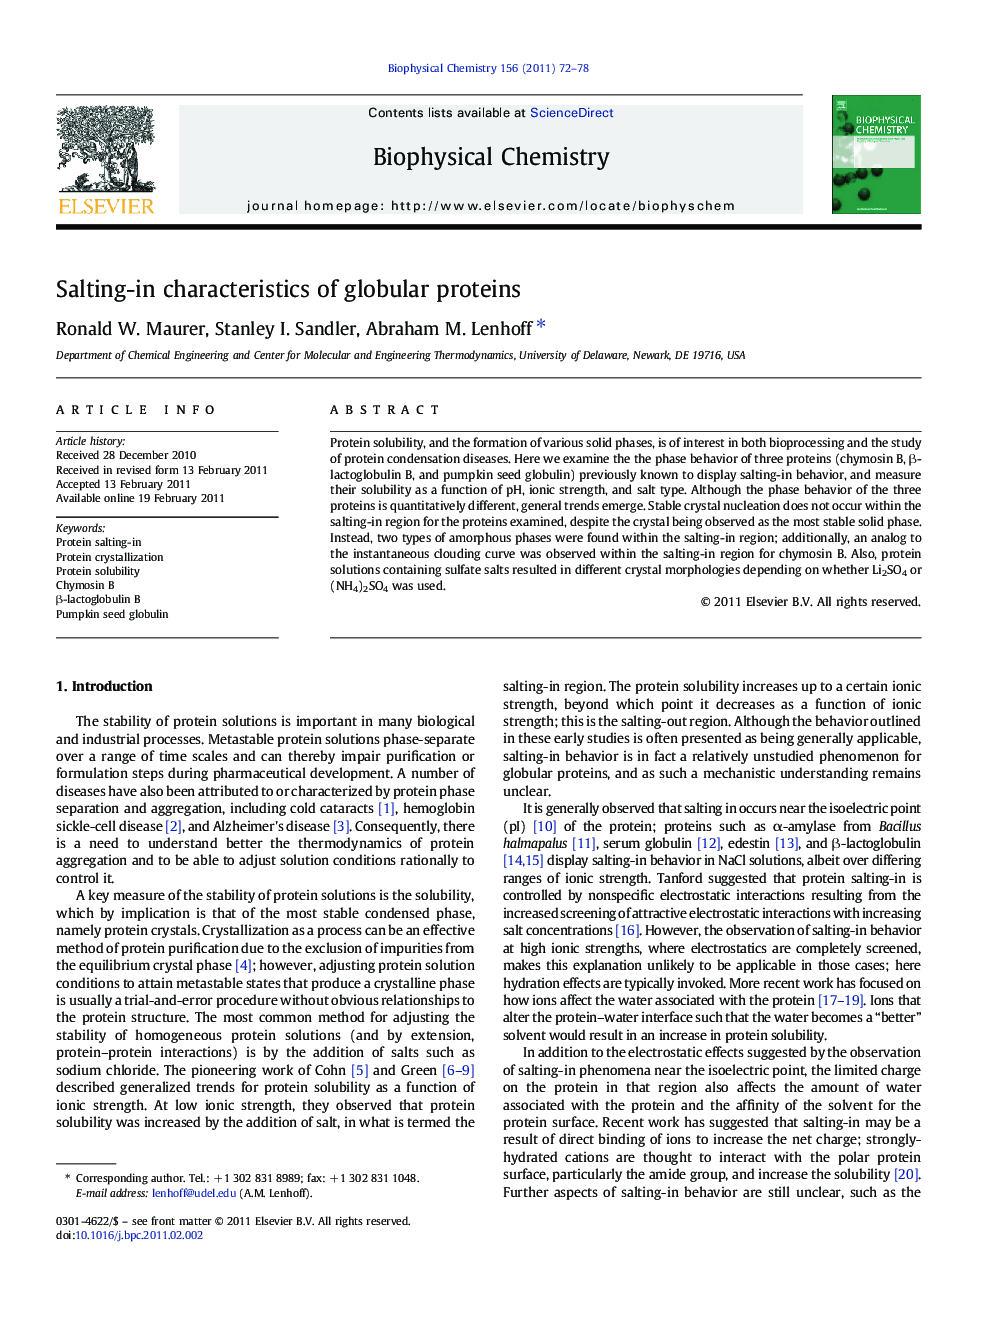 Salting-in characteristics of globular proteins